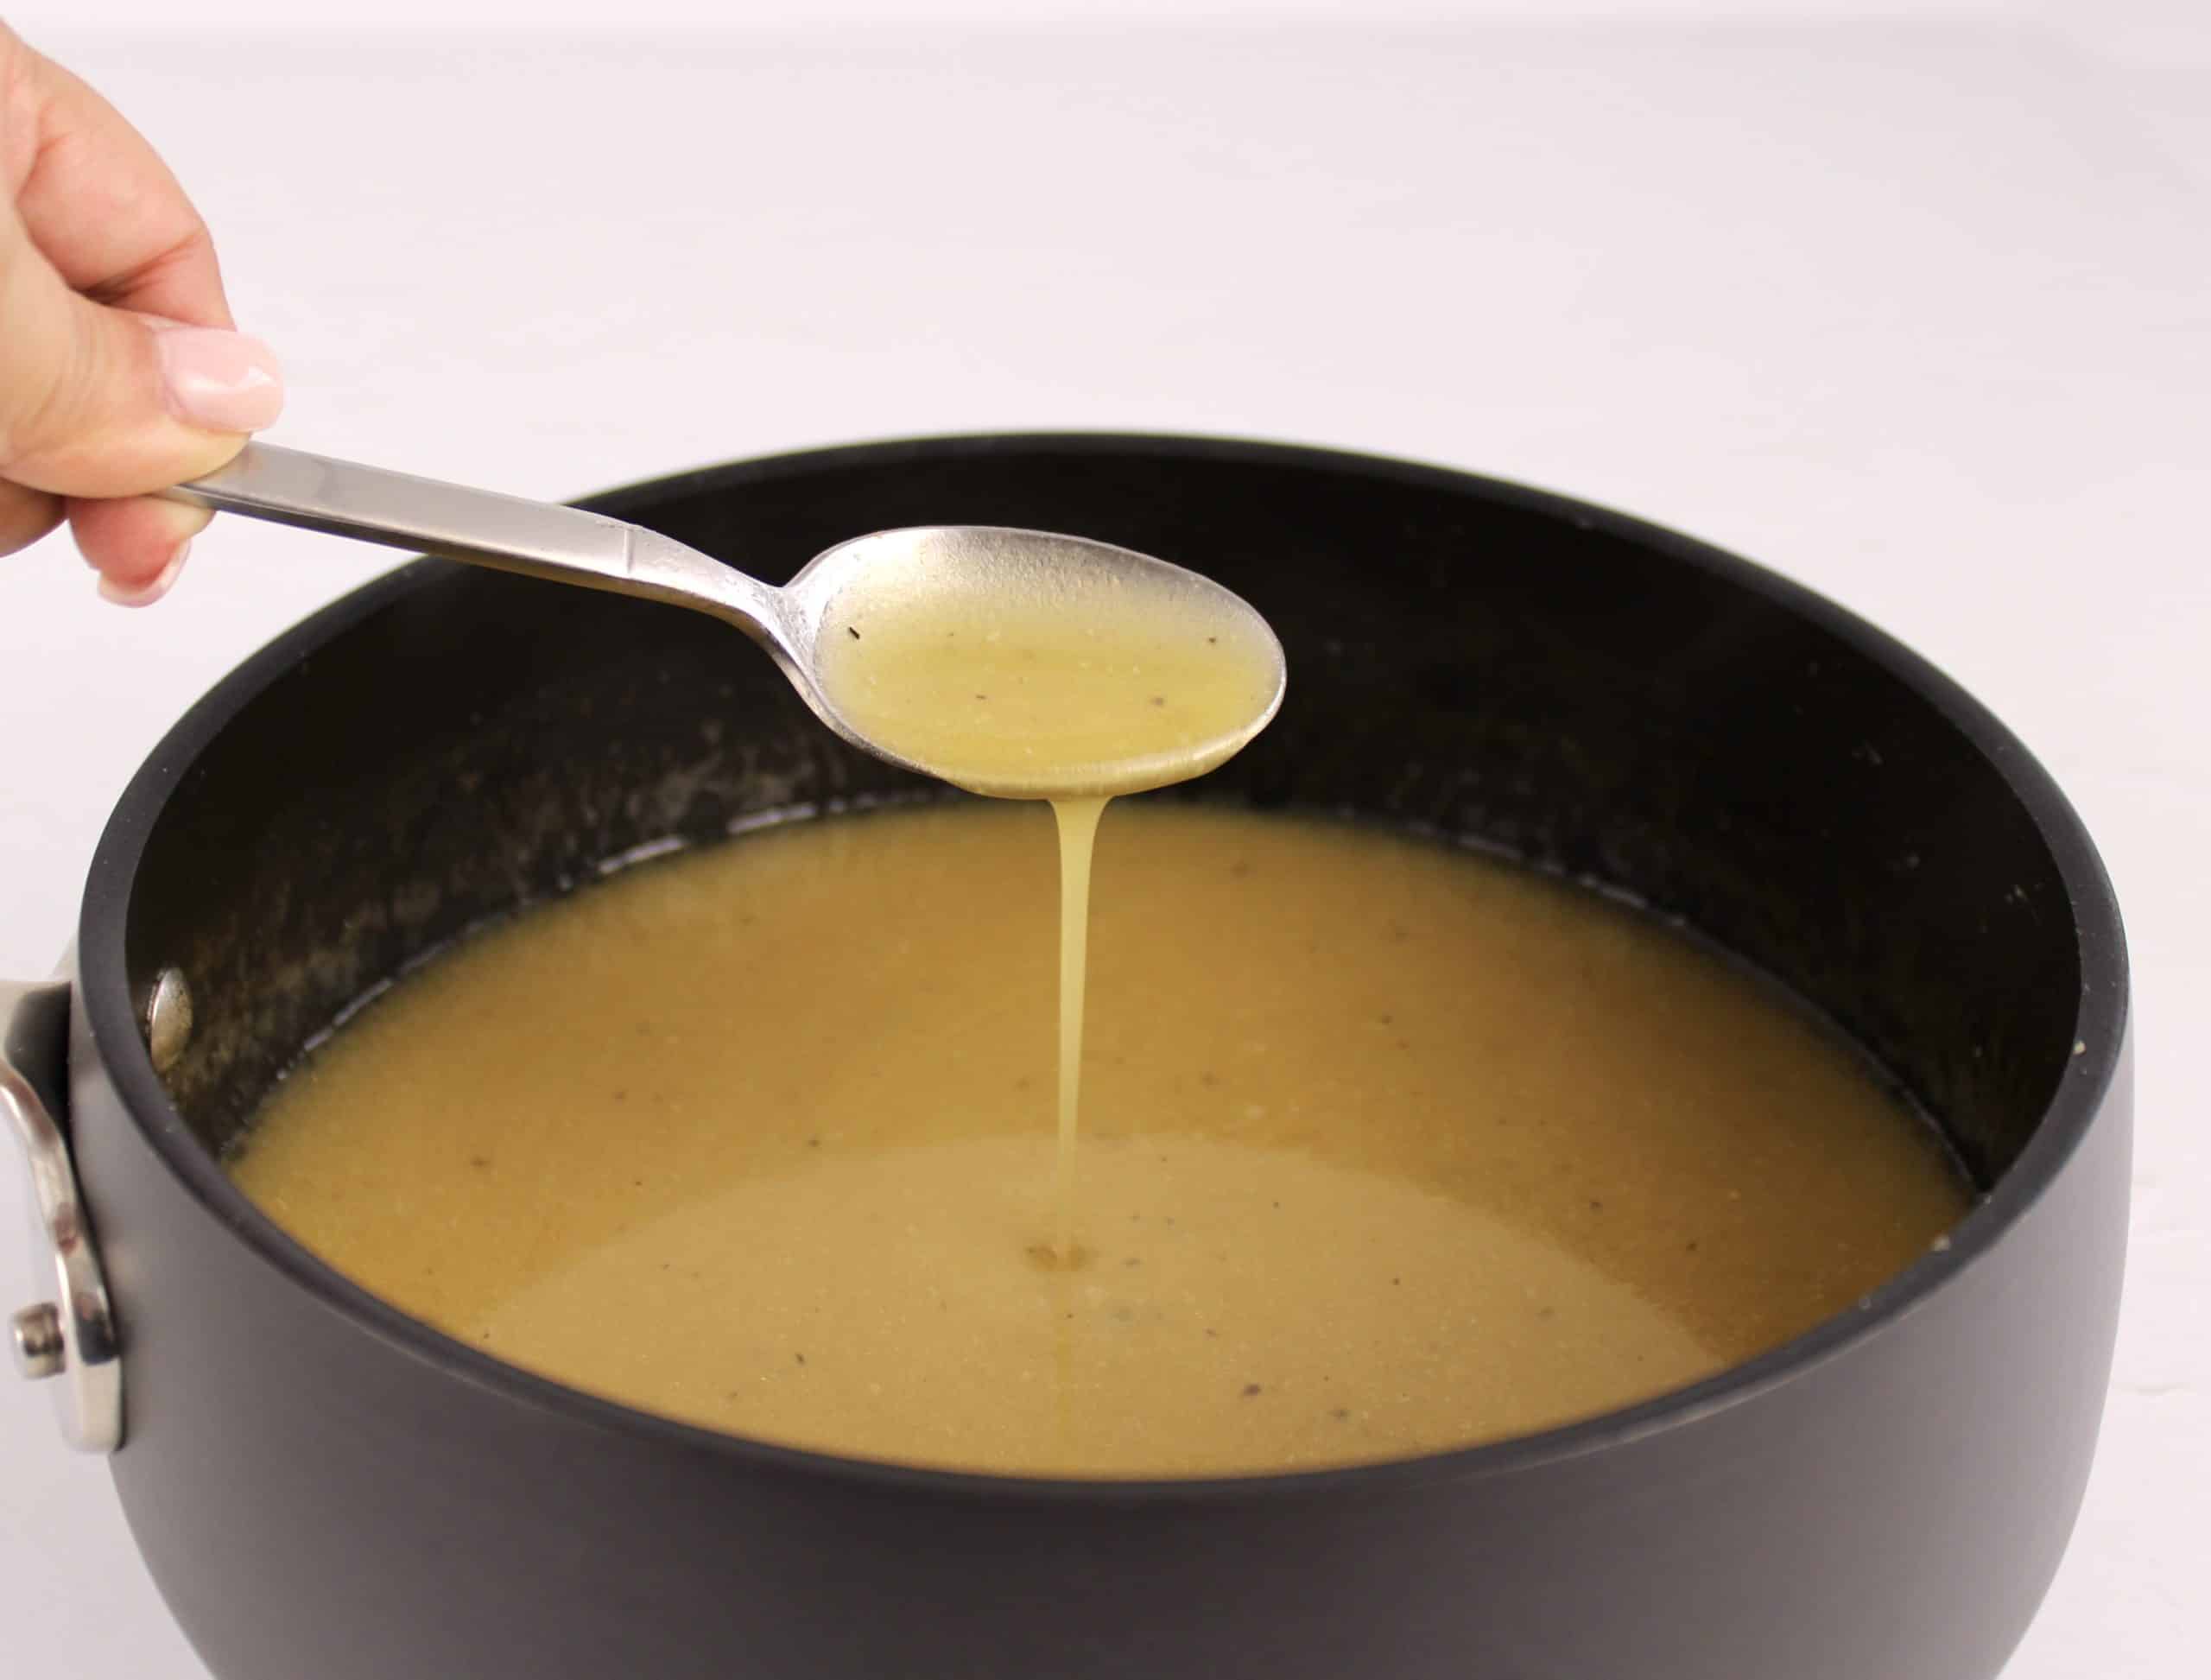 gravy being spooned in saucepan